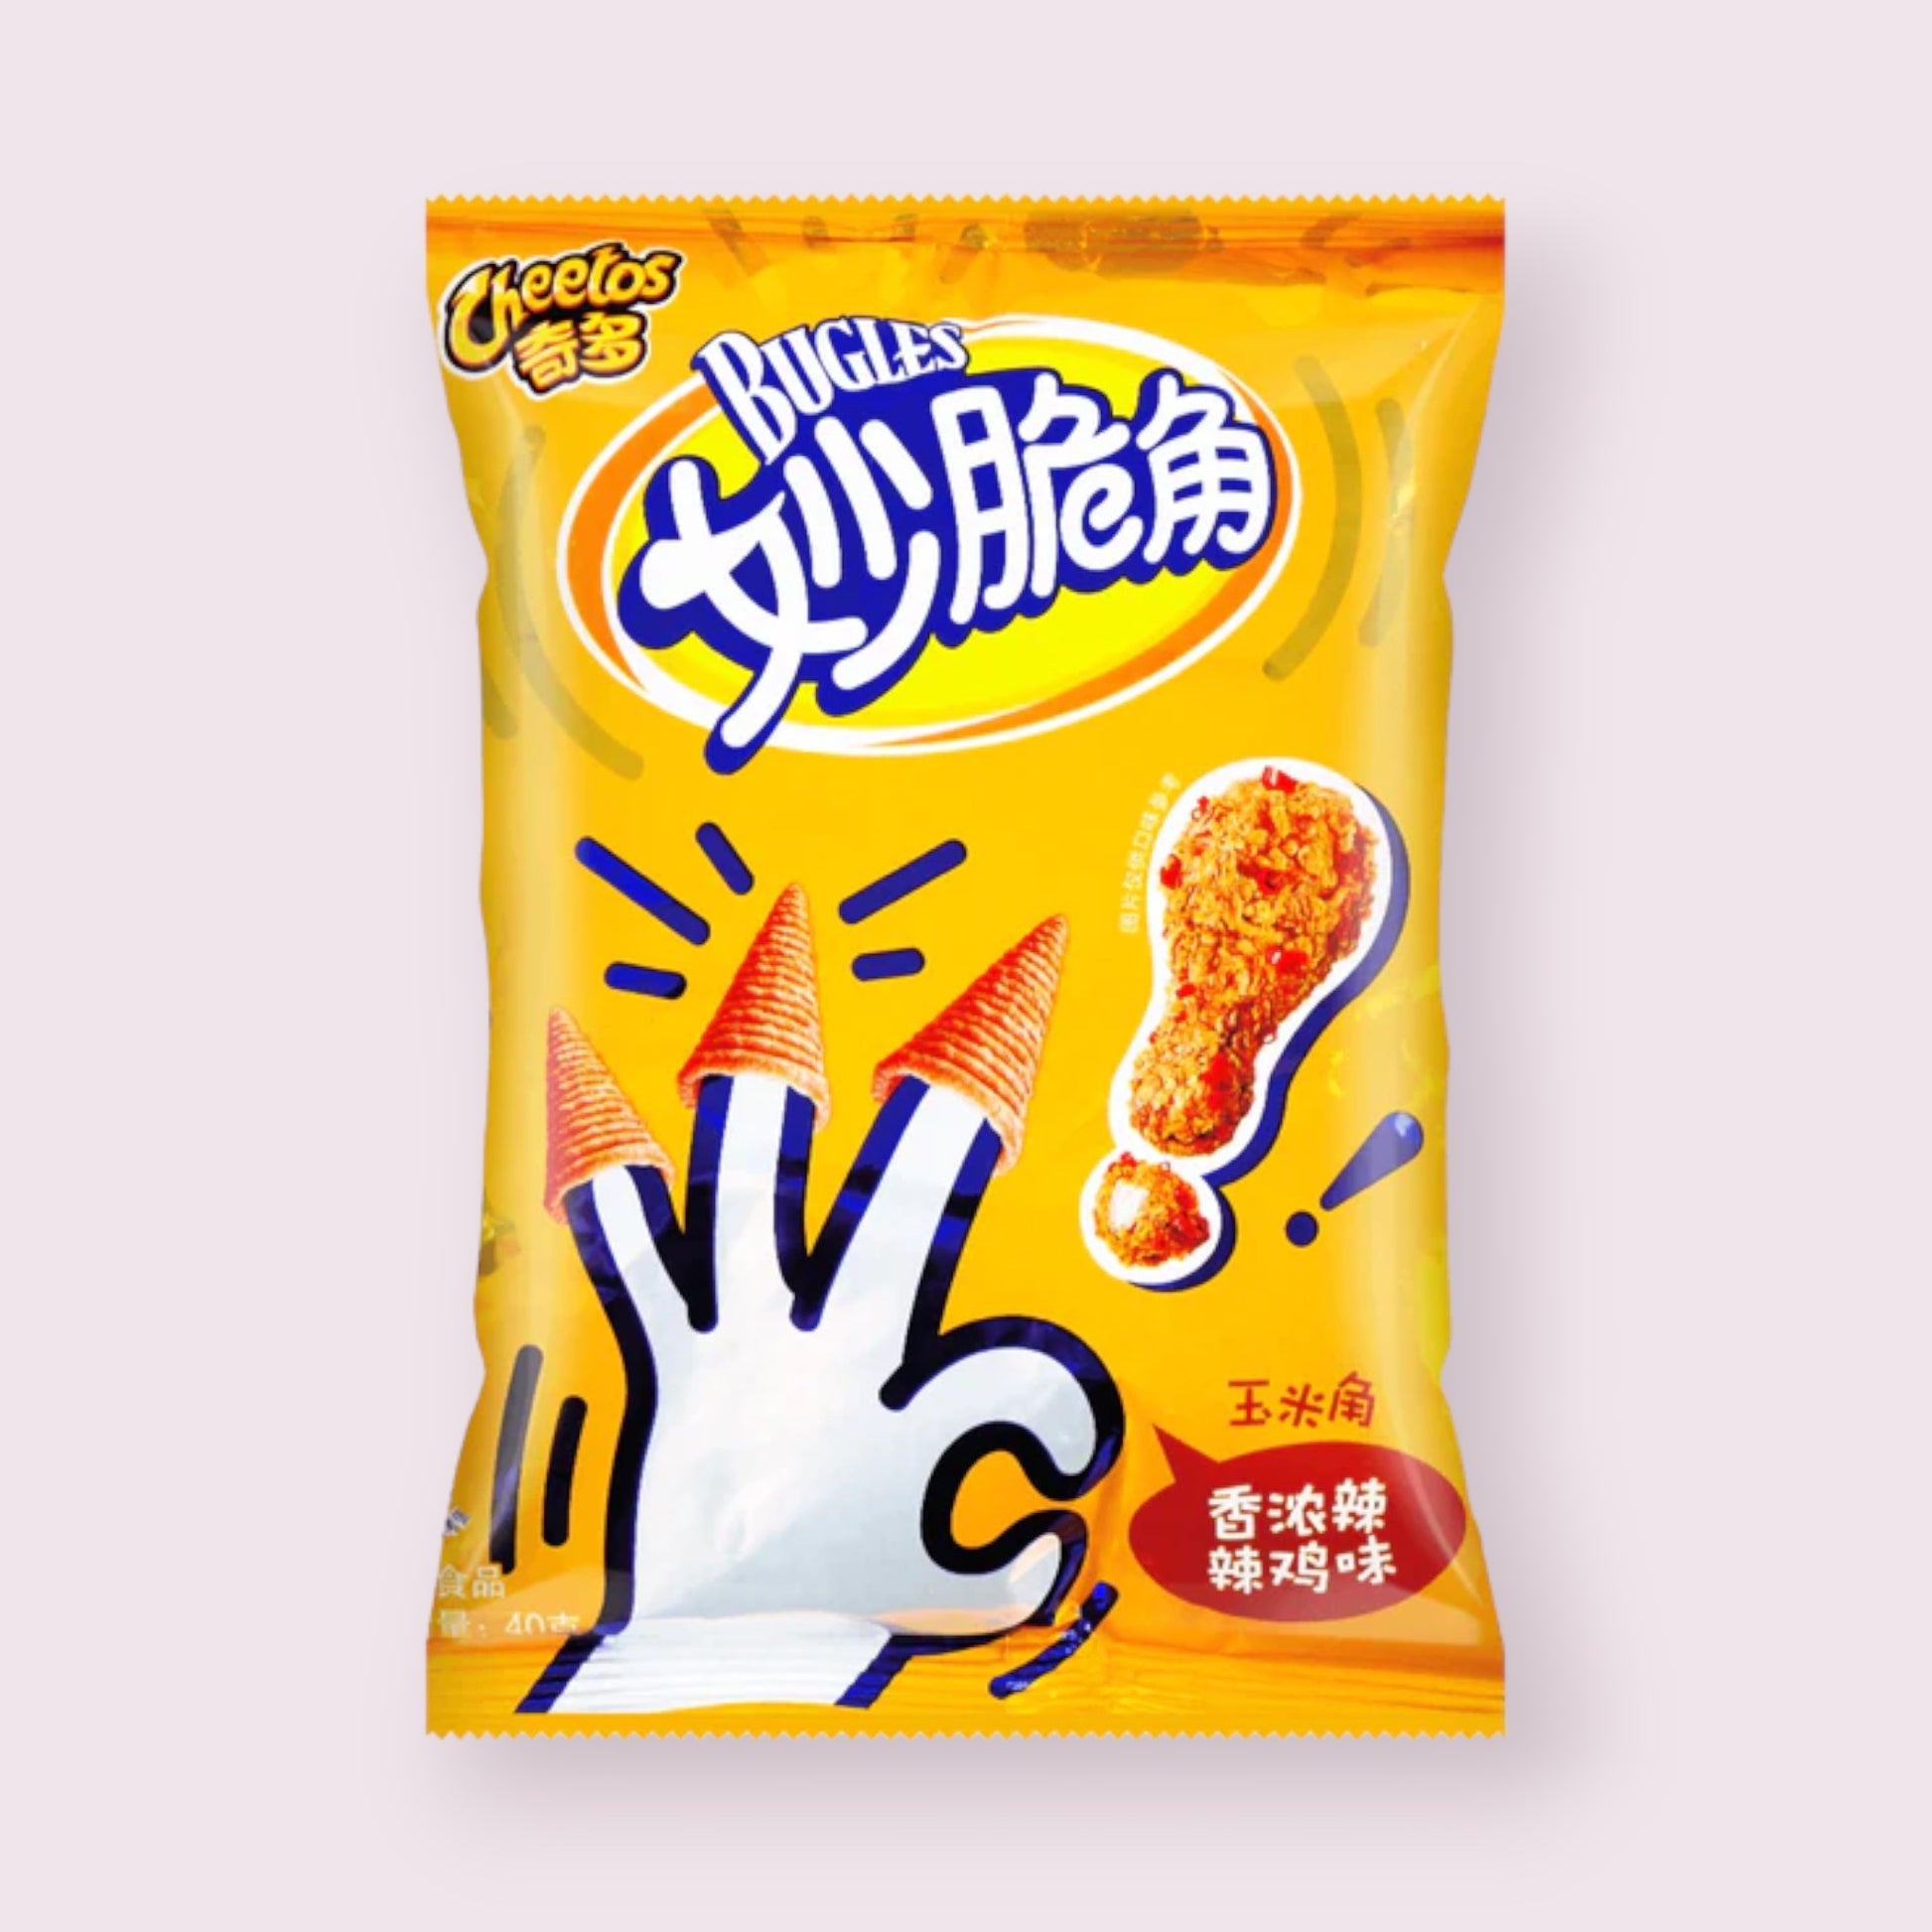 Bugles Cheetos Spicy Chicken Flavour Bag  Pixie Candy Shoppe   